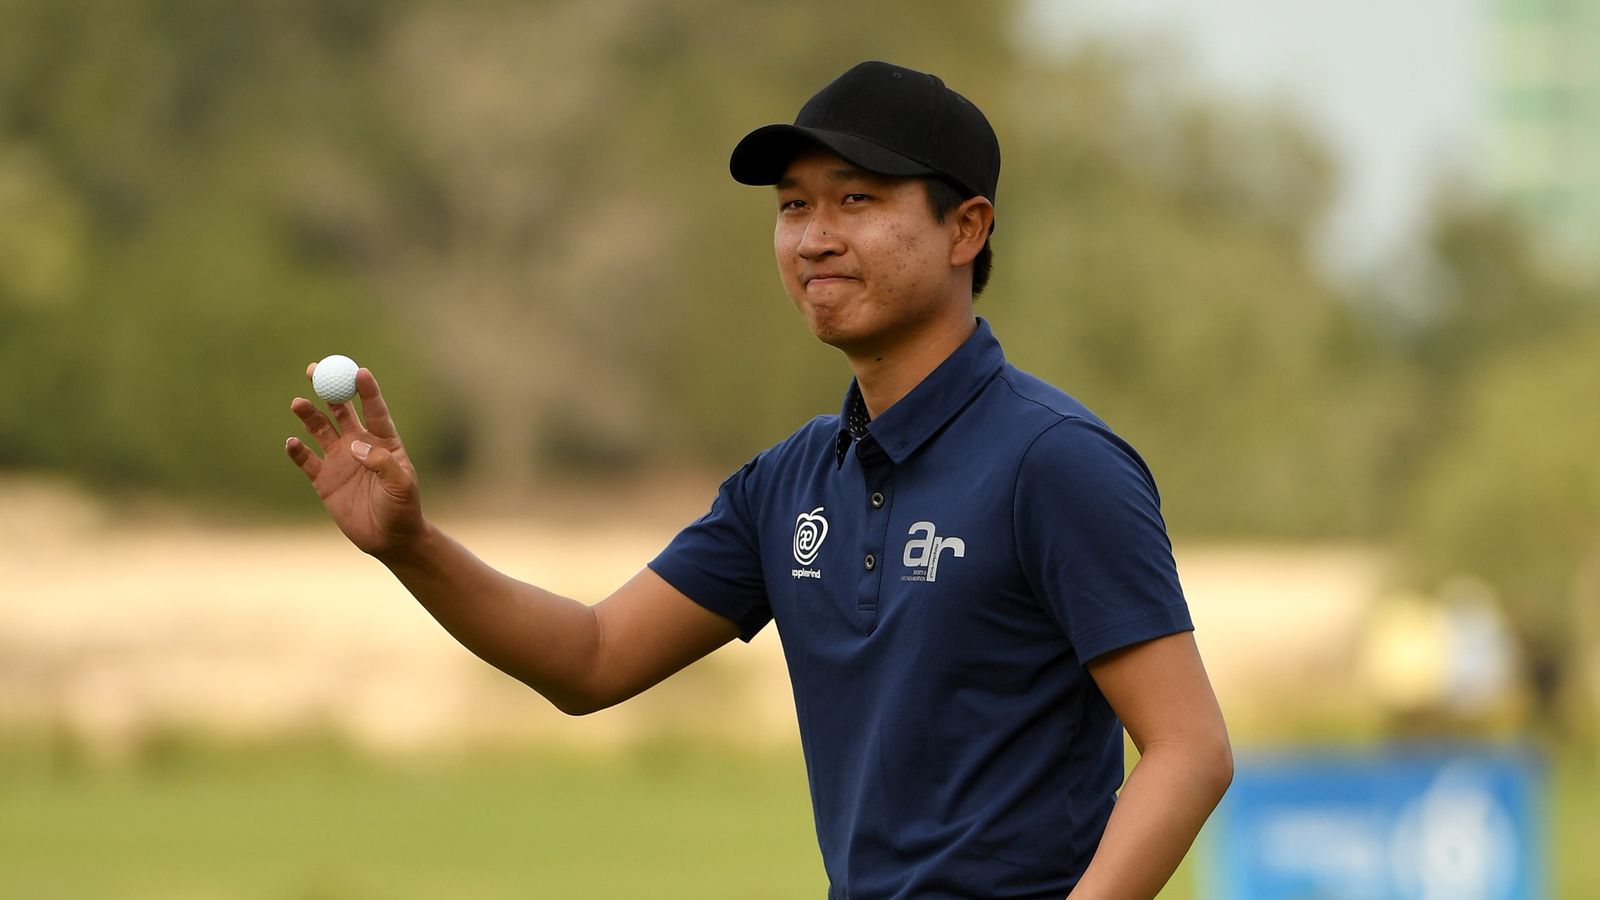 Jeunghun Wang opens up threeshot lead at Qatar Masters Golf News